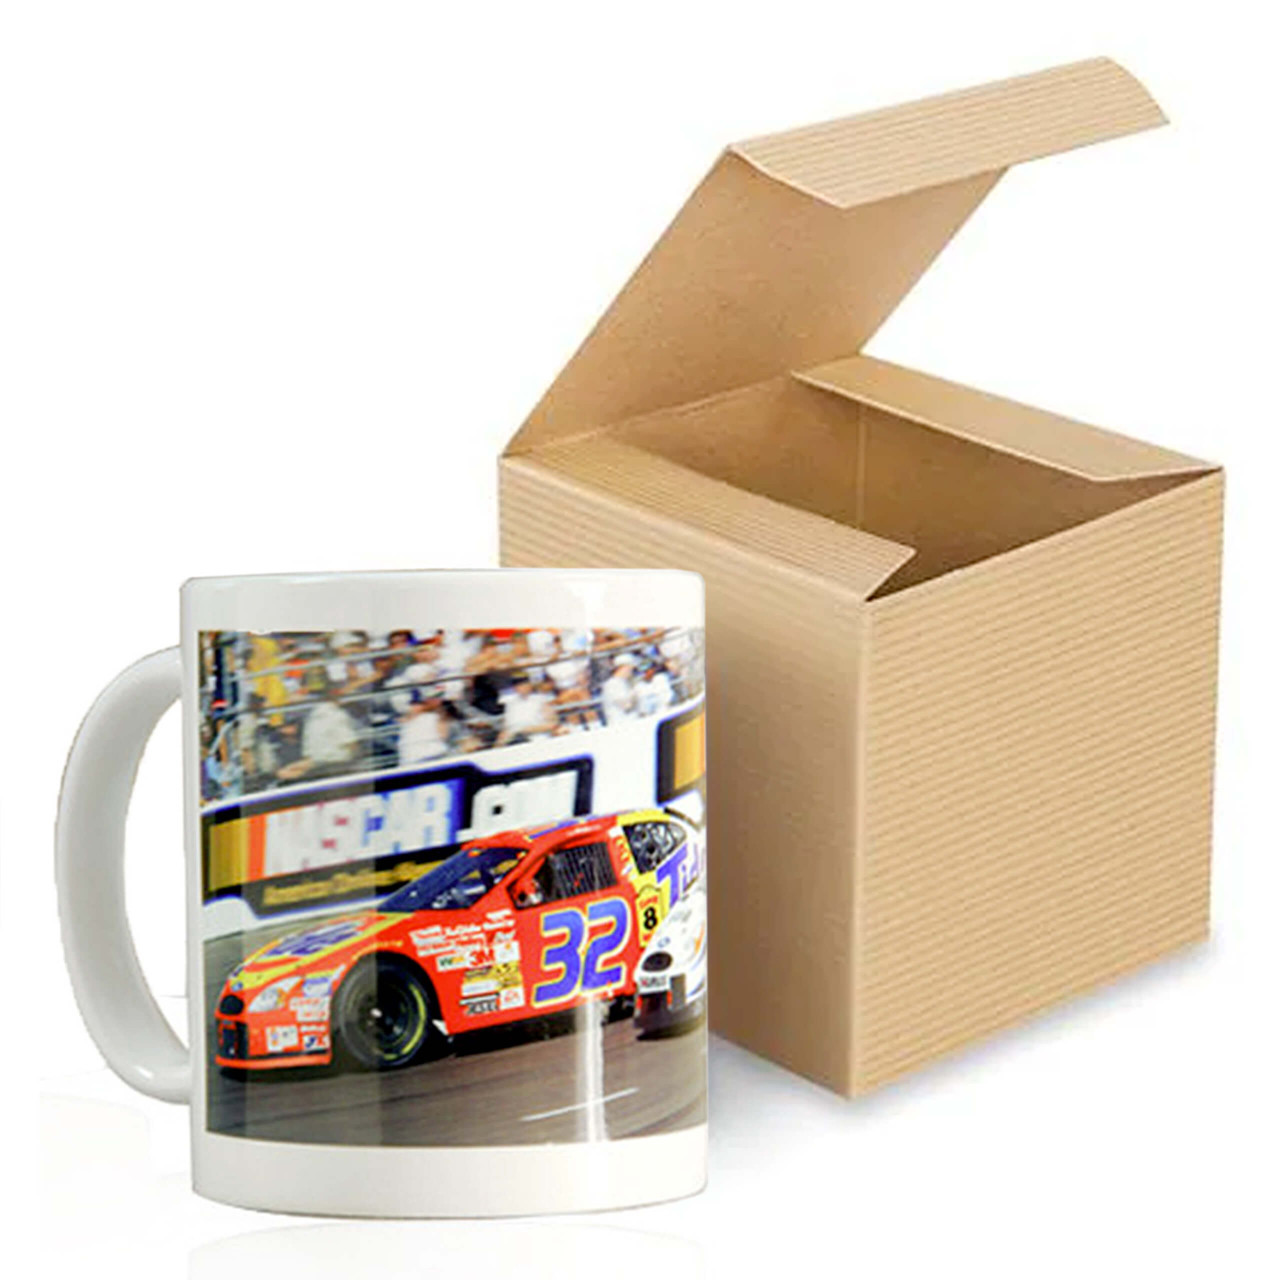 NC Custom: 4 Mug Deluxe Gift Box. Supplied By: Lanco